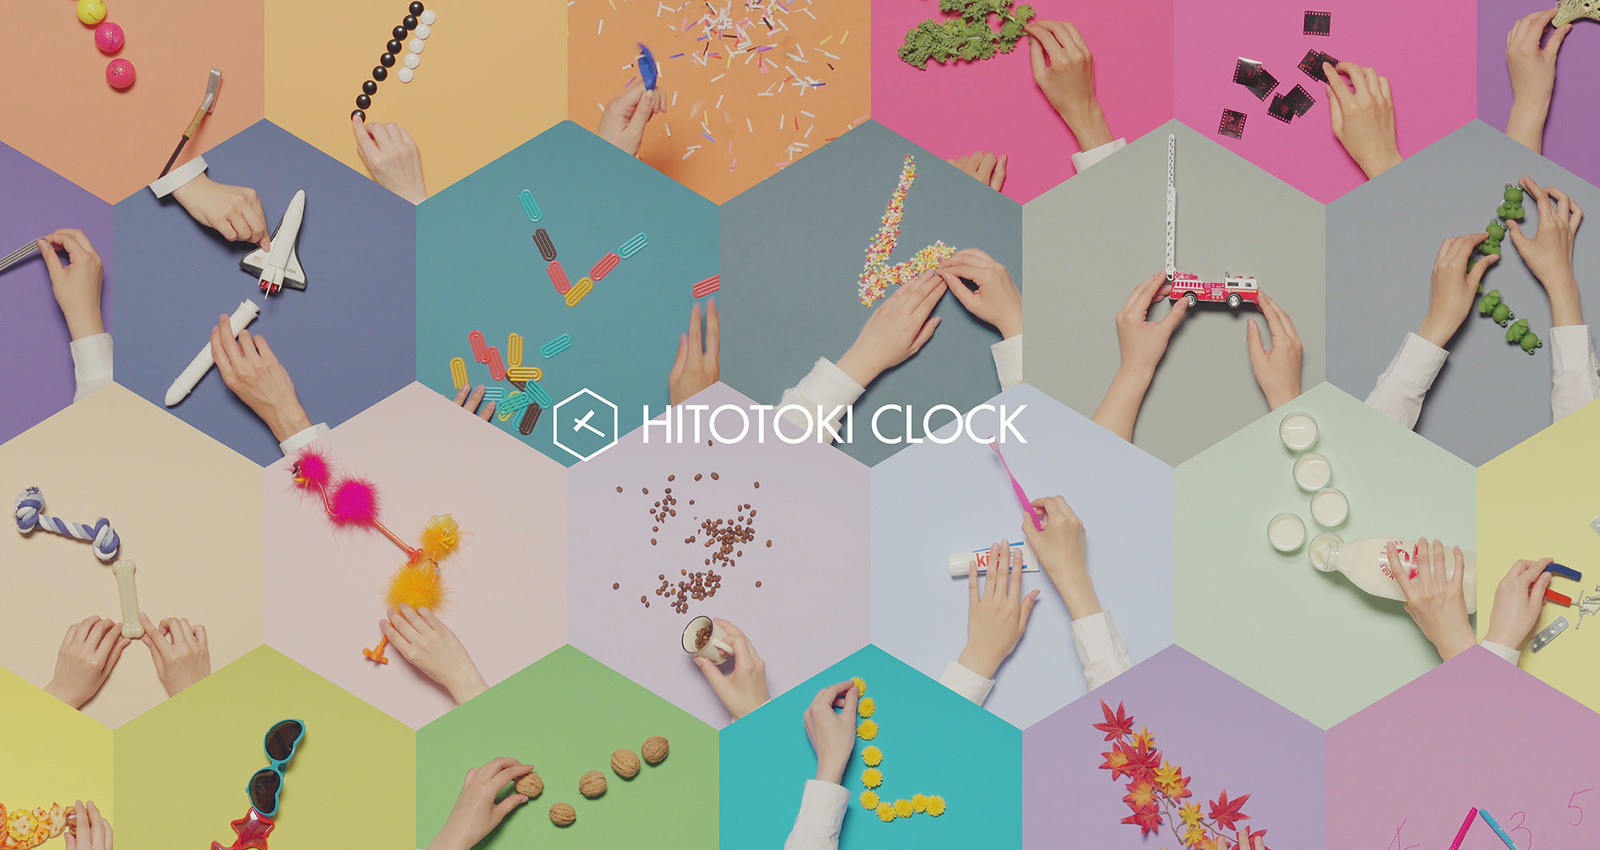 HITOTOKI CLOCK